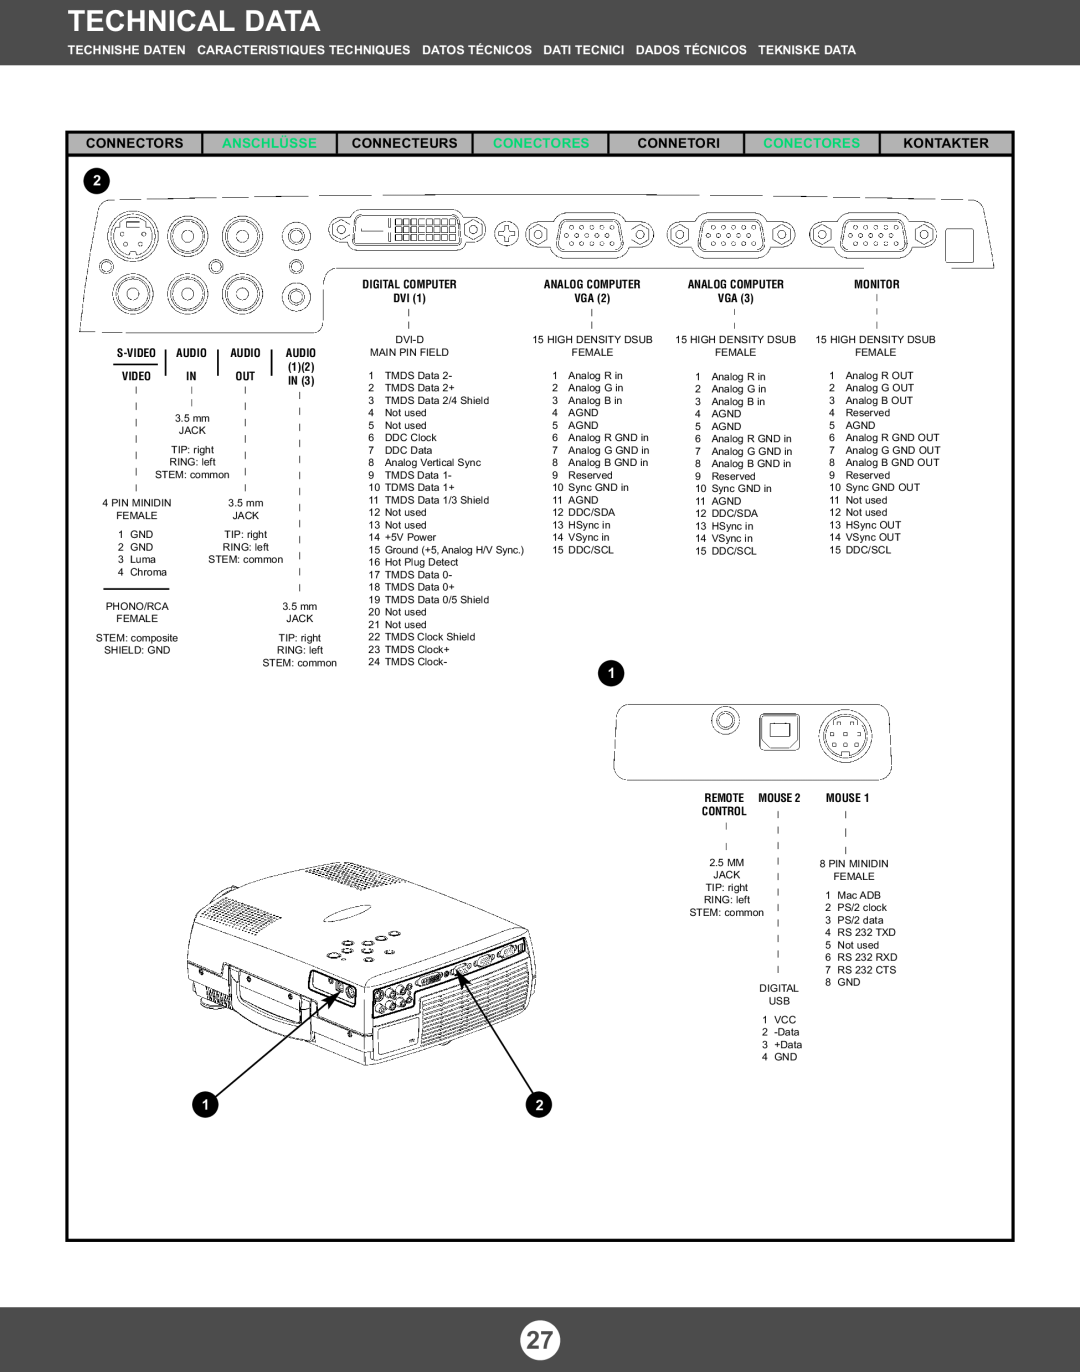 Proxima ASA 6150/6100 manual Technical Data, Anschlüsse, Conectores, Control, Remote Mouse 